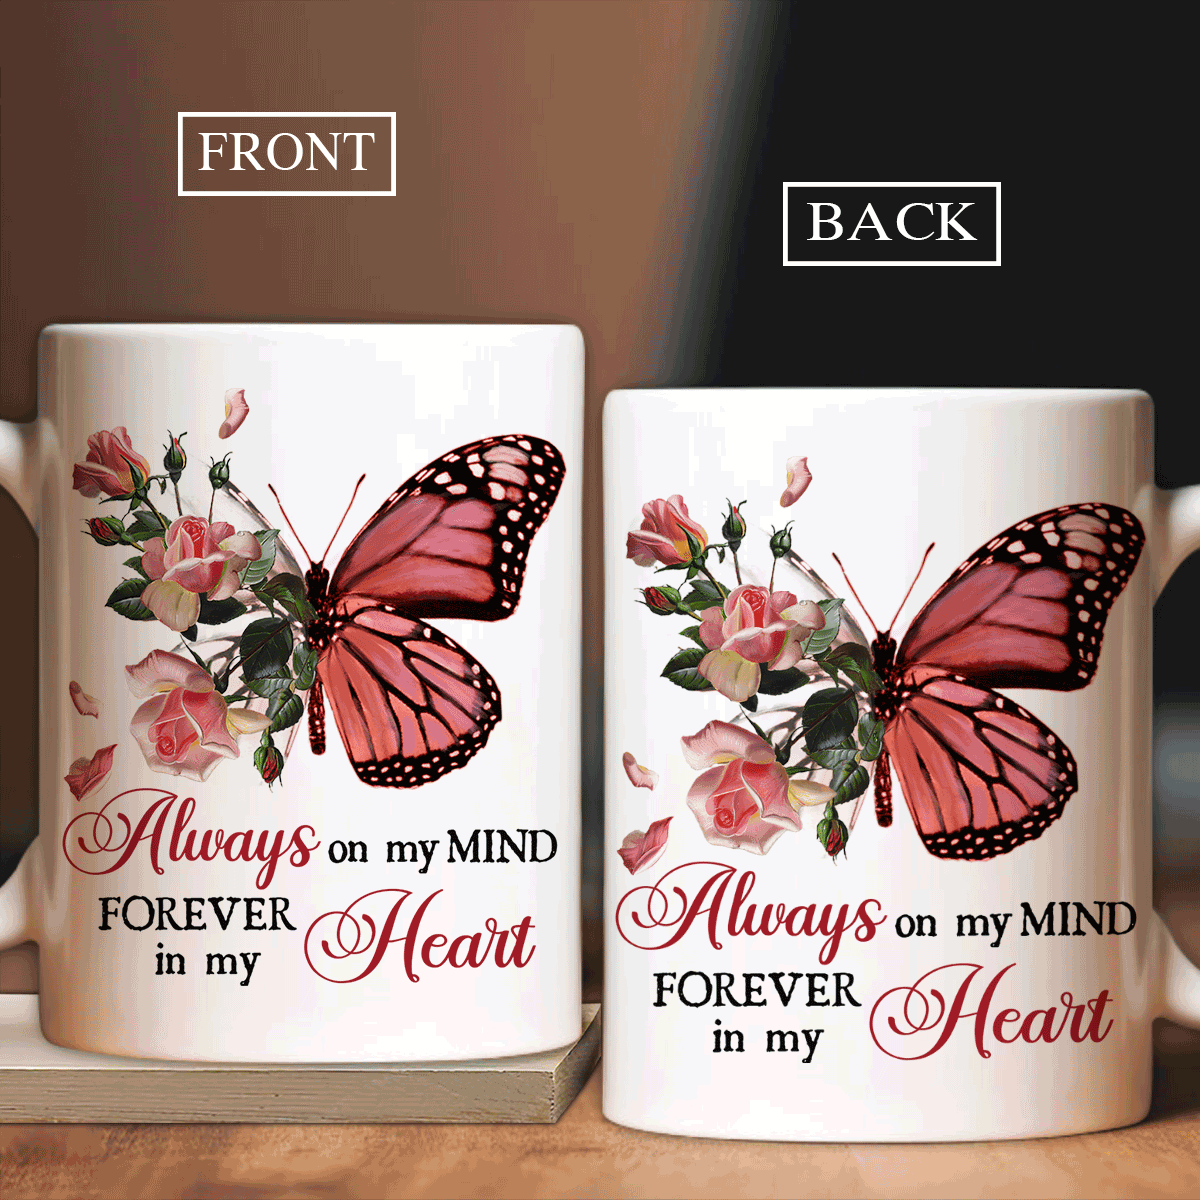 Memorial White Mug - Pink butterfly, Light pink rose - Gift for members family - Always on my mind, Forever in my heart - Heaven White Mug.